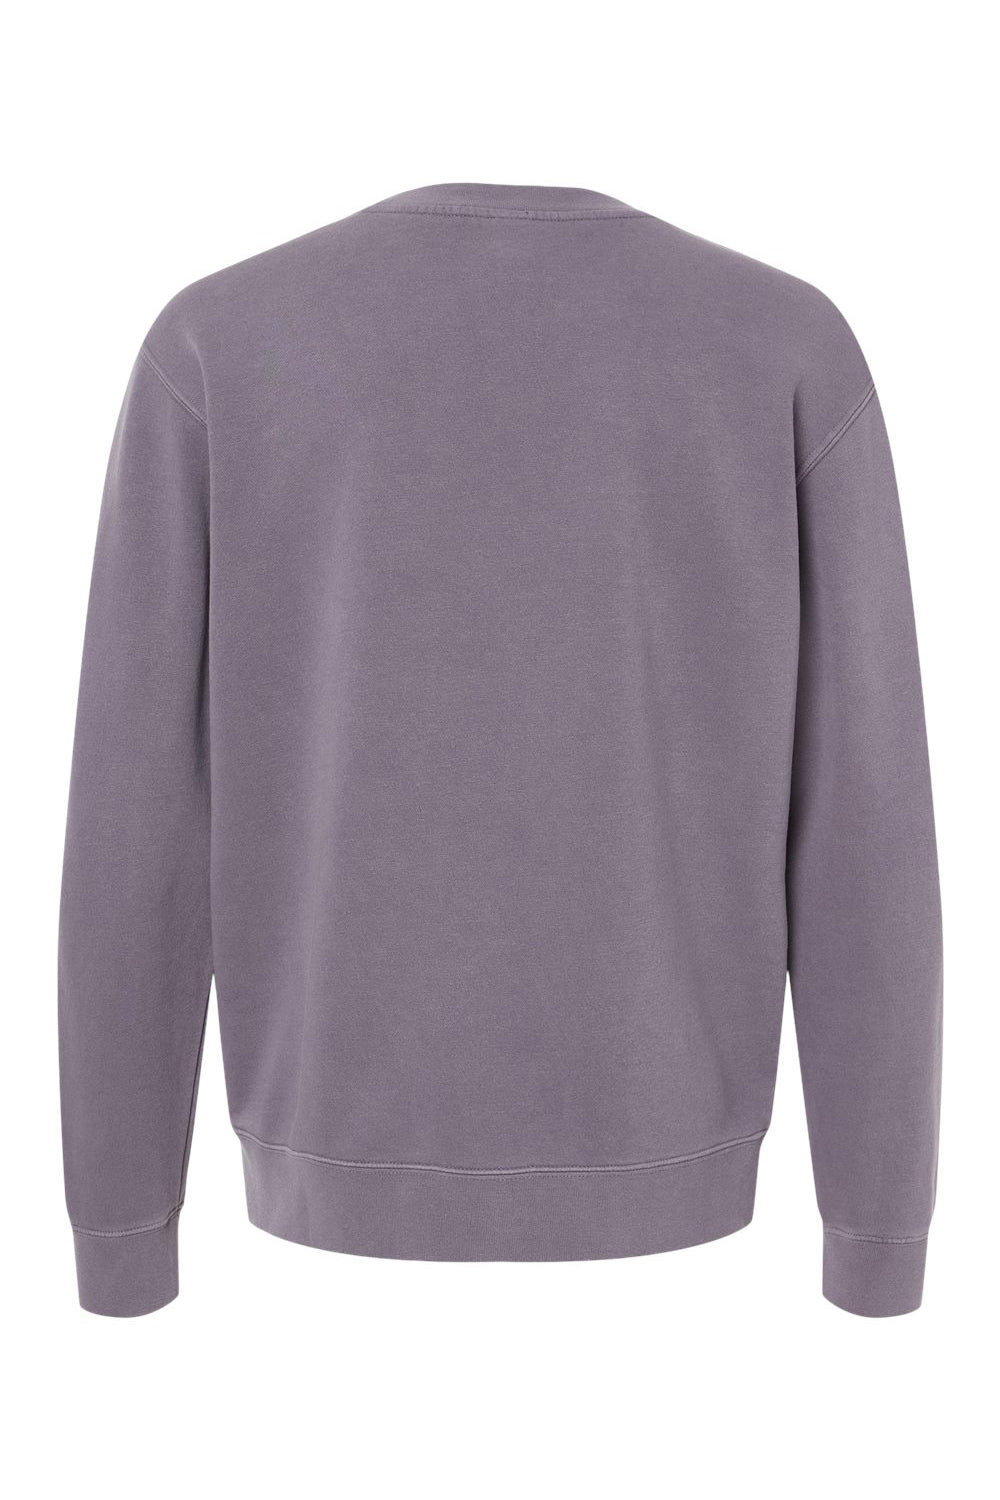 Independent Trading Co. PRM3500 Mens Pigment Dyed Crewneck Sweatshirt Plum Purple Flat Back